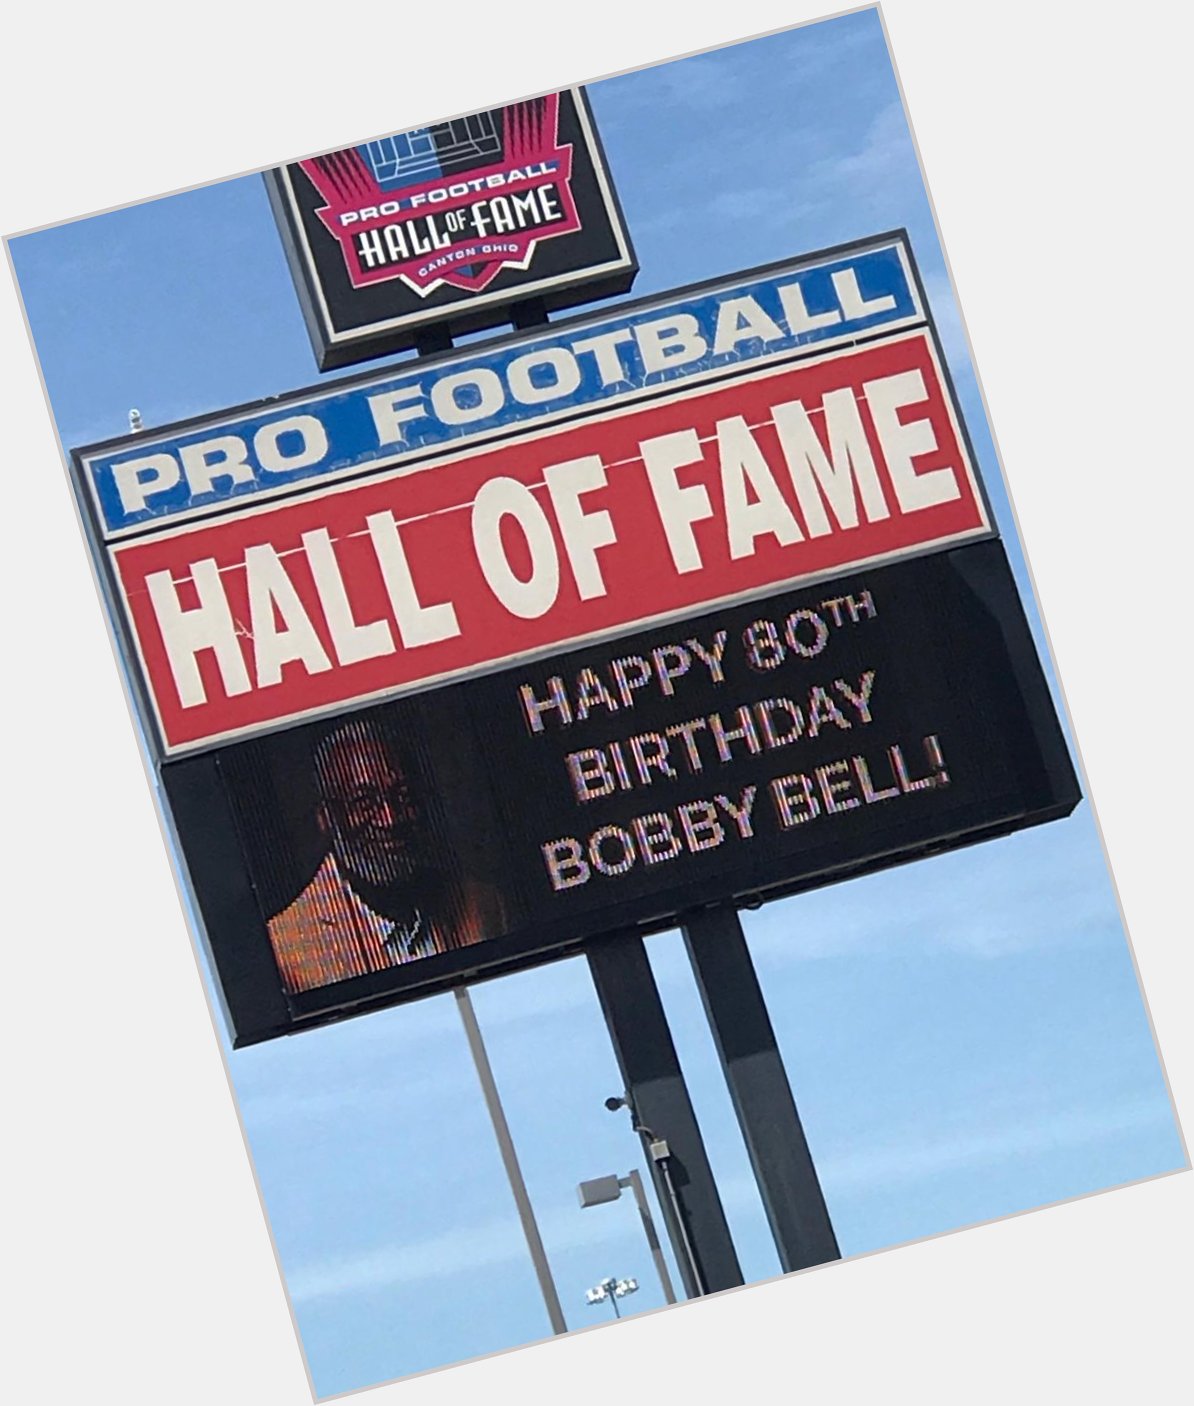 Wishing my good friend Bobby Bell a Happy Birthday! KC Chiefs great, SBIV Champion,HOF,  